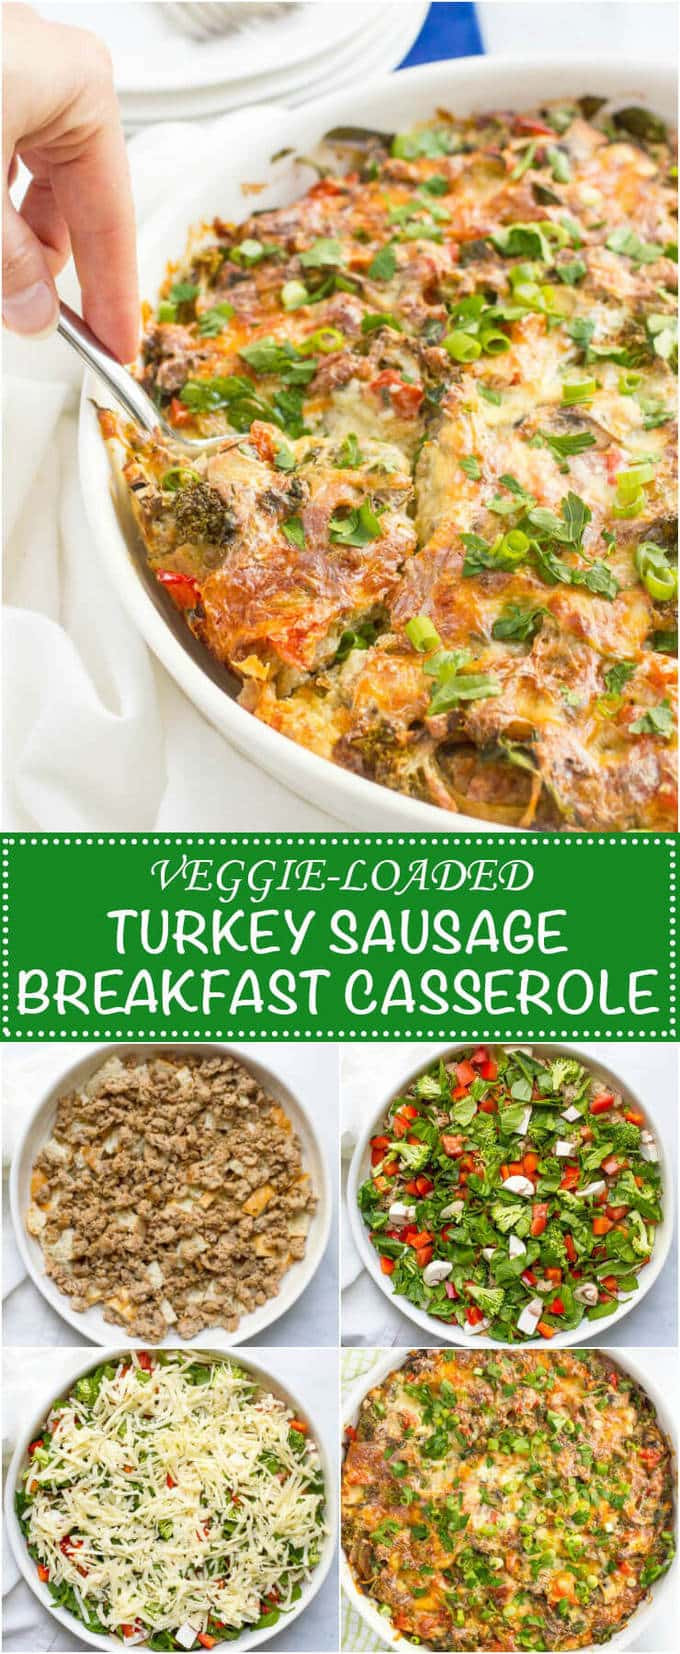 Healthy Make Ahead Casseroles
 Make ahead healthy sausage breakfast casserole Family